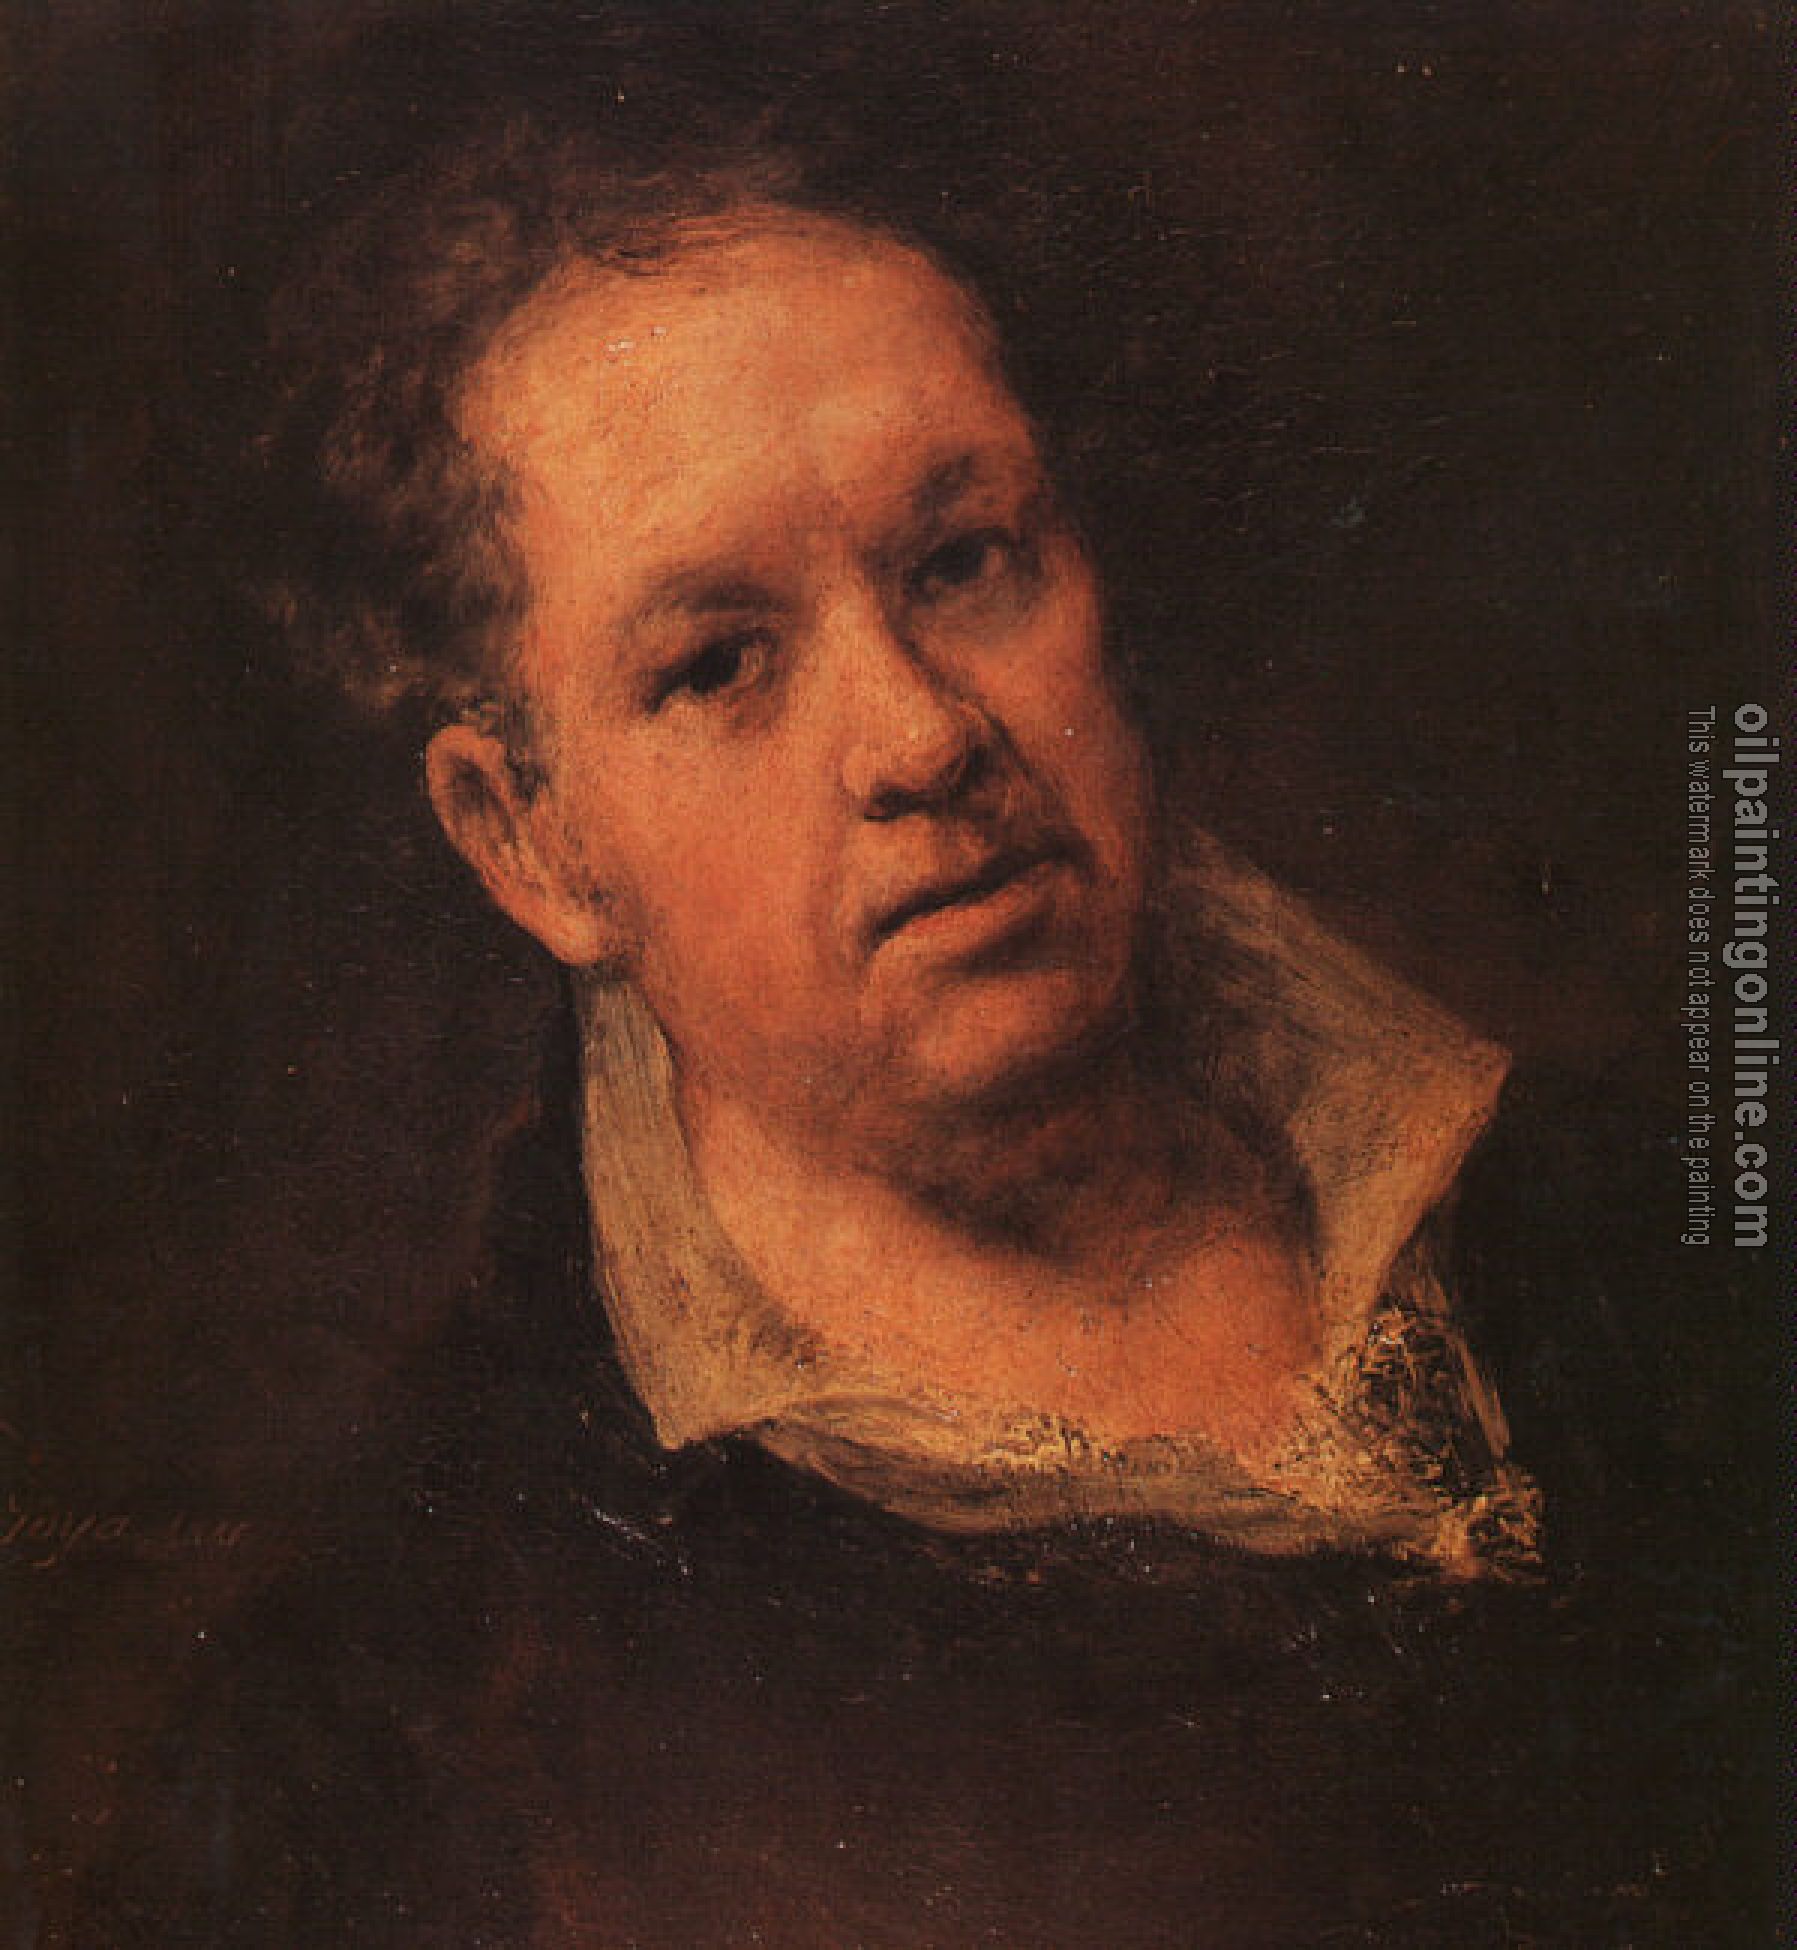 Goya, Francisco de - Self Portrait